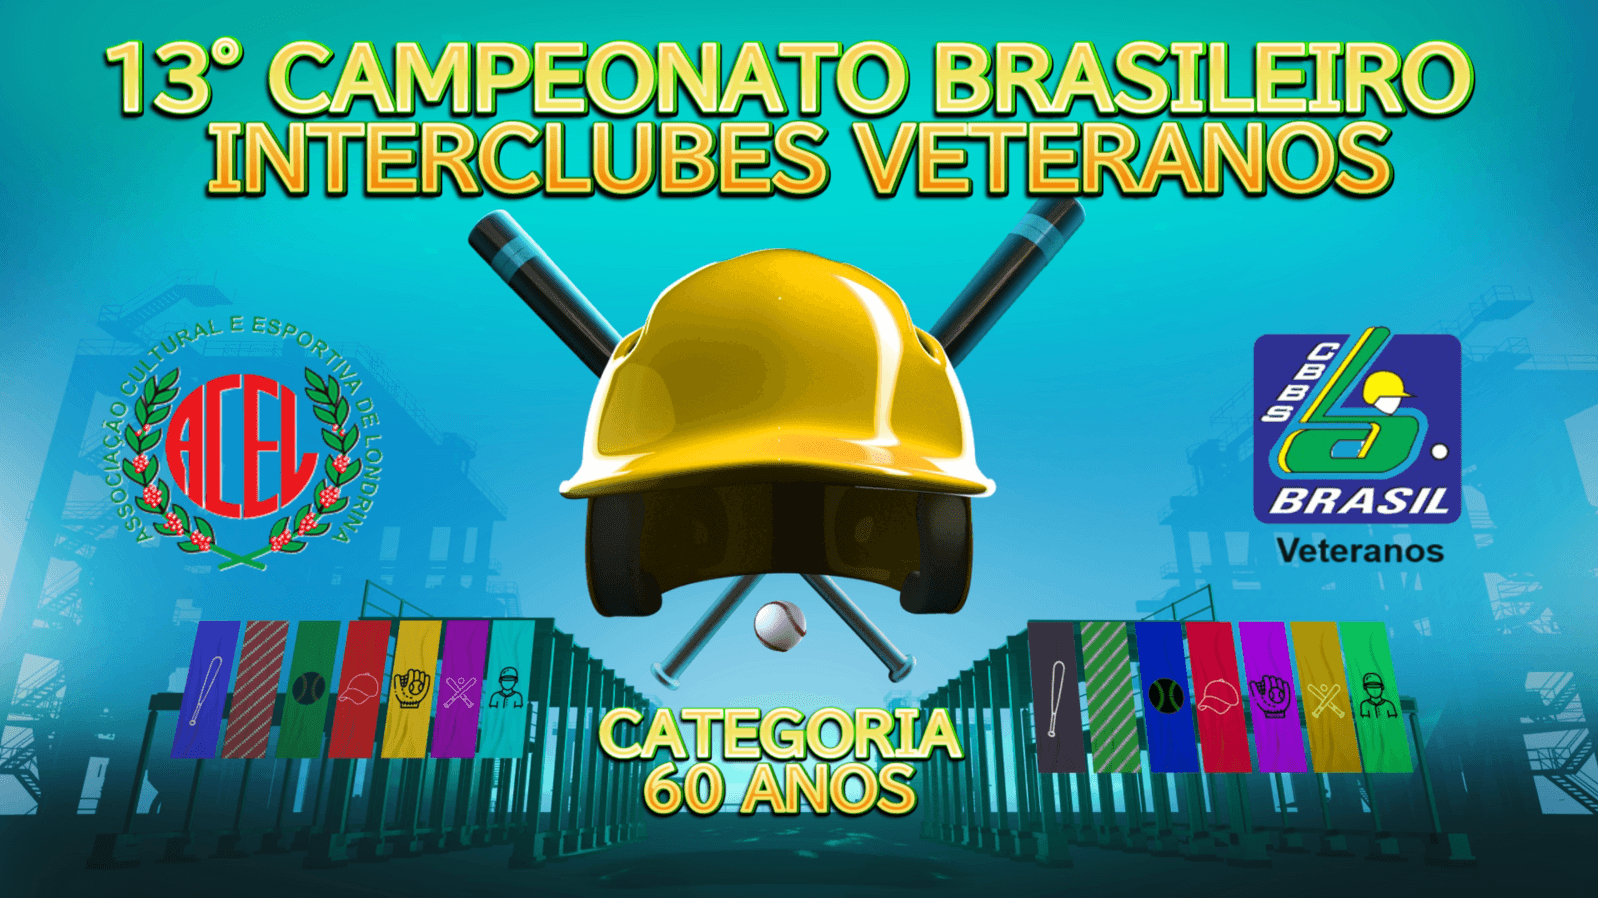 CAPA 13 CAMP BRASIL INTERCLUBES VETERANOS 60 ANOS LOGOS